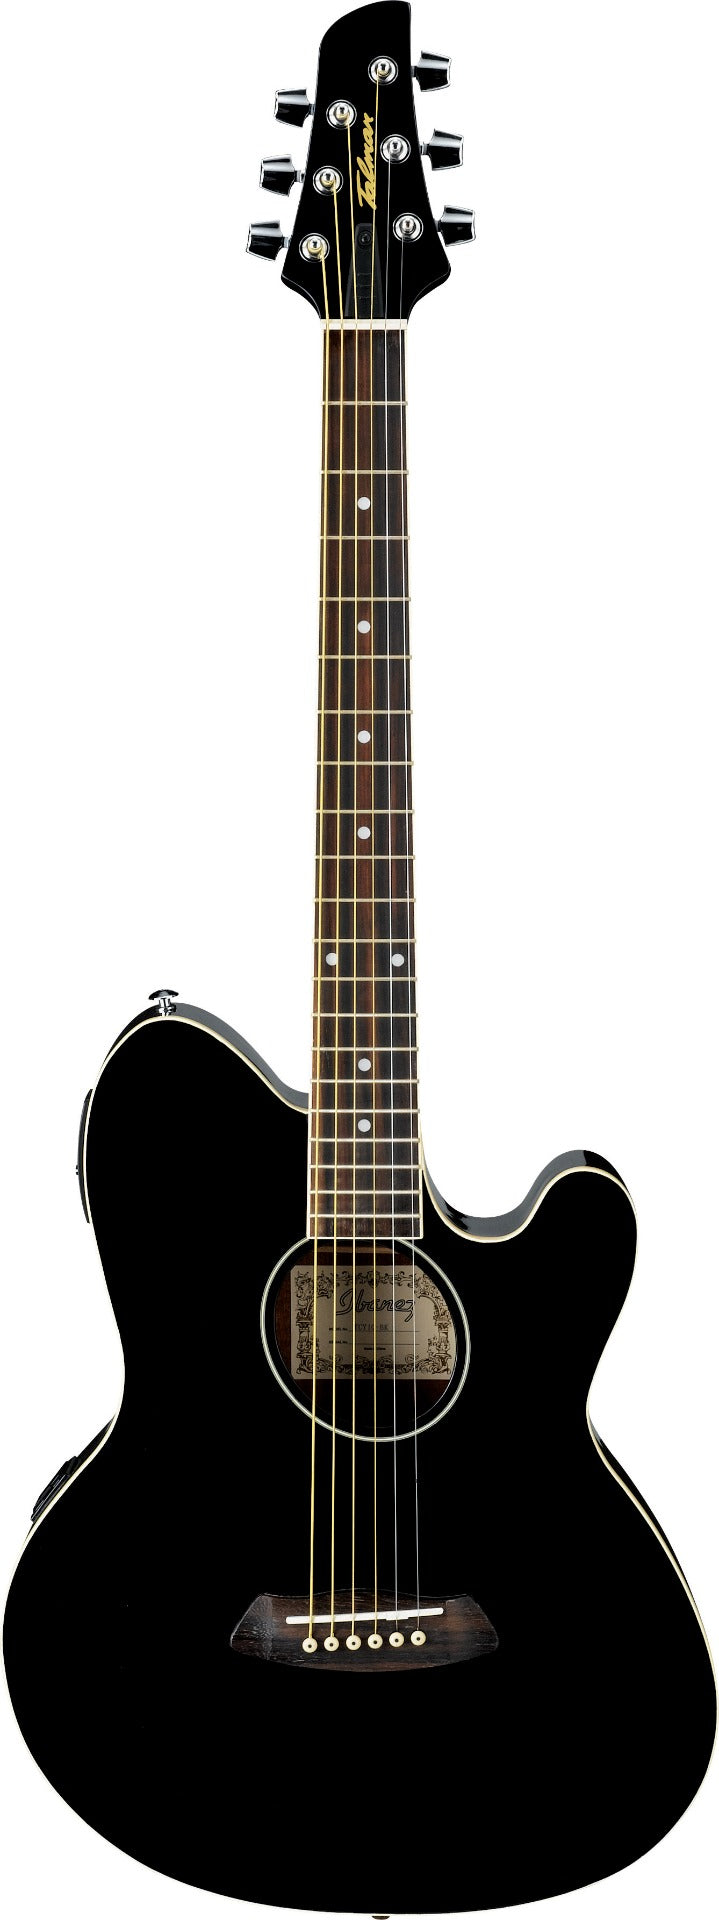 Ibanez TCY10E Talman Acoustic Electric Guitar - Black